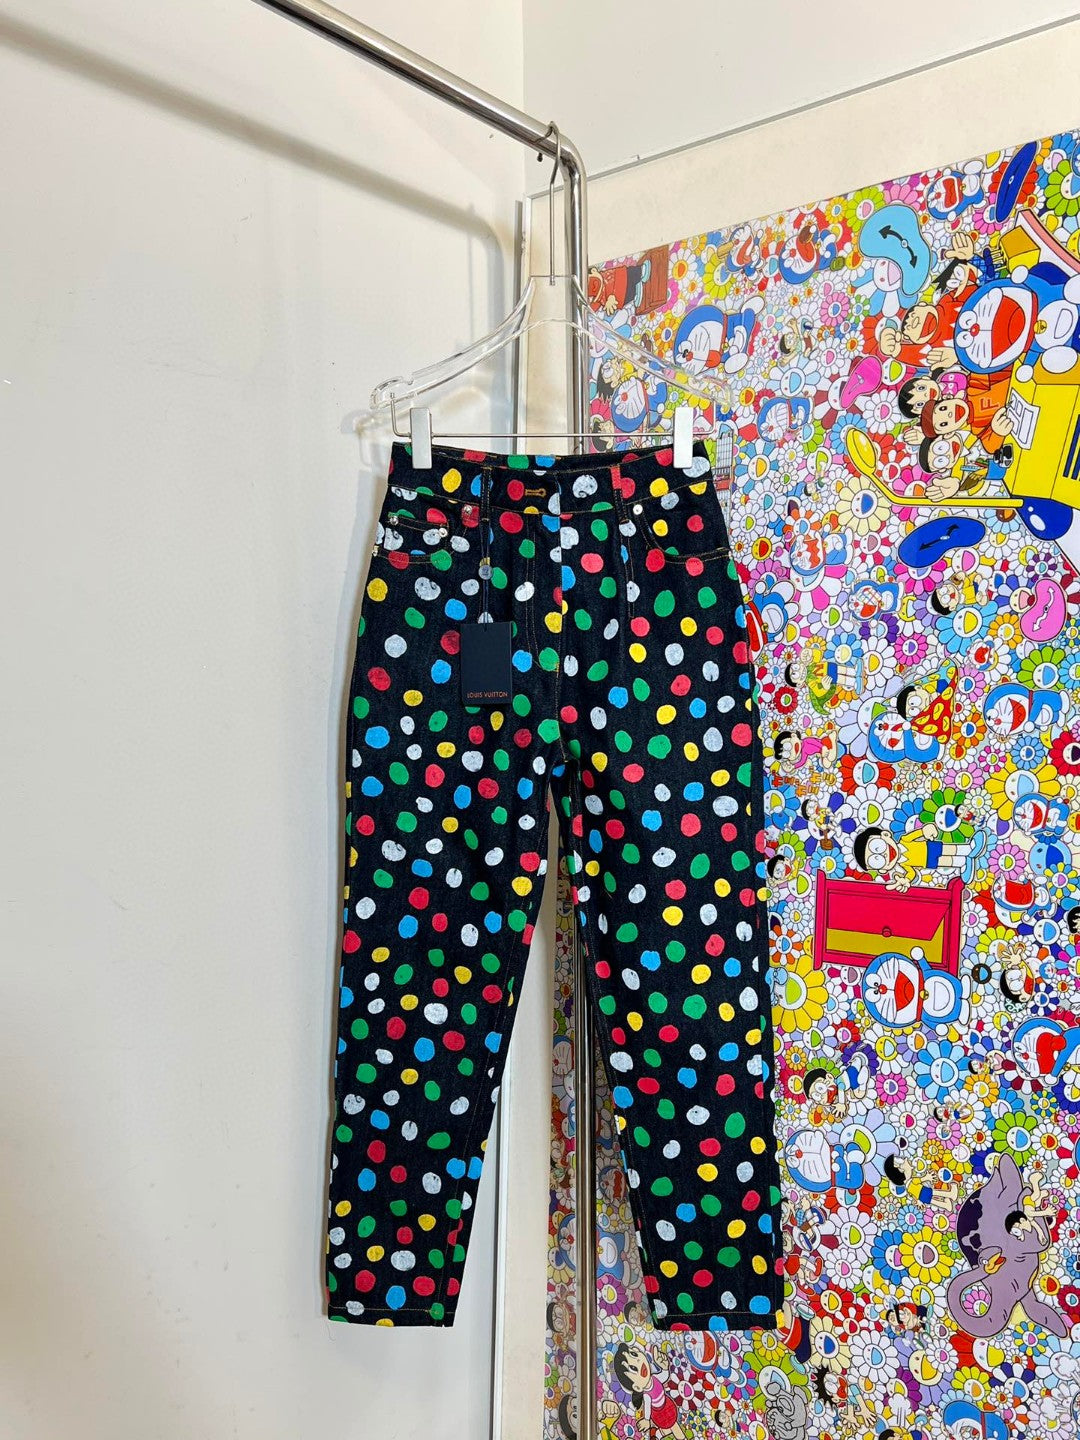 Louis Vuitton LV x YK Painted Dots Denim Mini Skirt